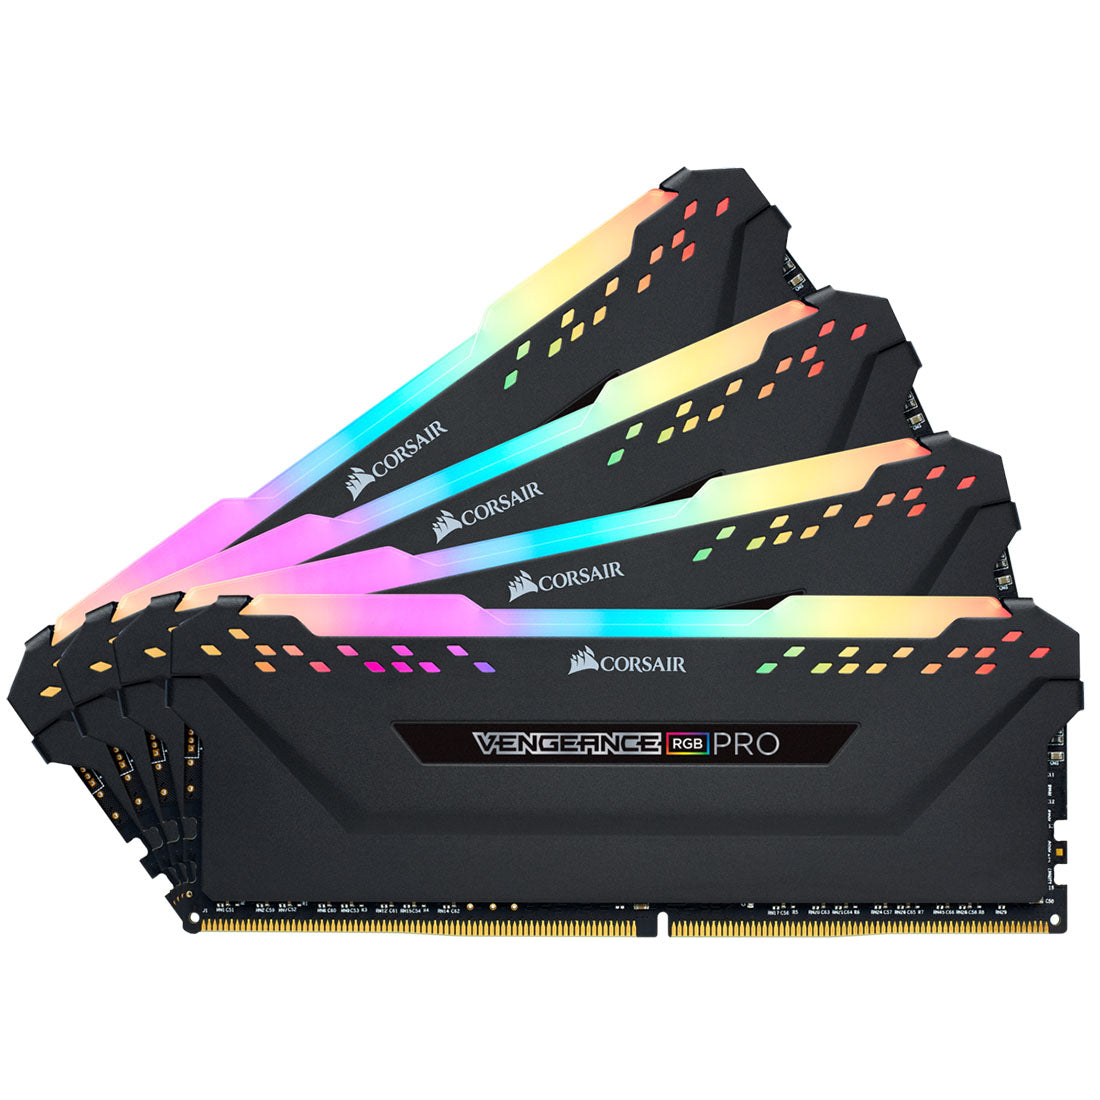 Corsair Vengeance RGB Pro 64GB (4x16GB) DDR4 RAM 3600MHz CL18 डेस्कटॉप मेमोरी